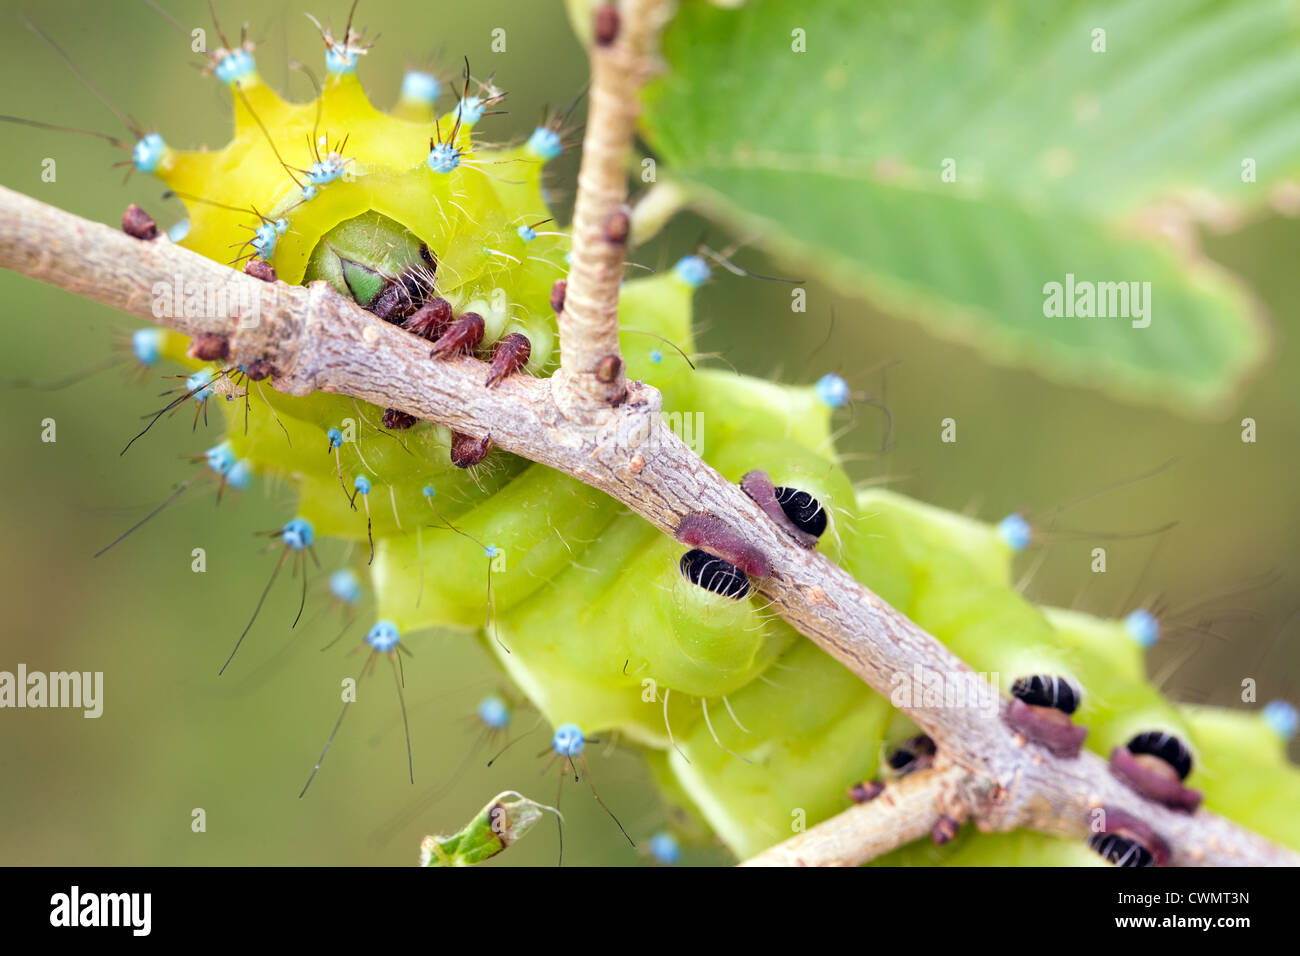 big caterpillar of Saturnia pyri giant moth on tree branch Stock Photo